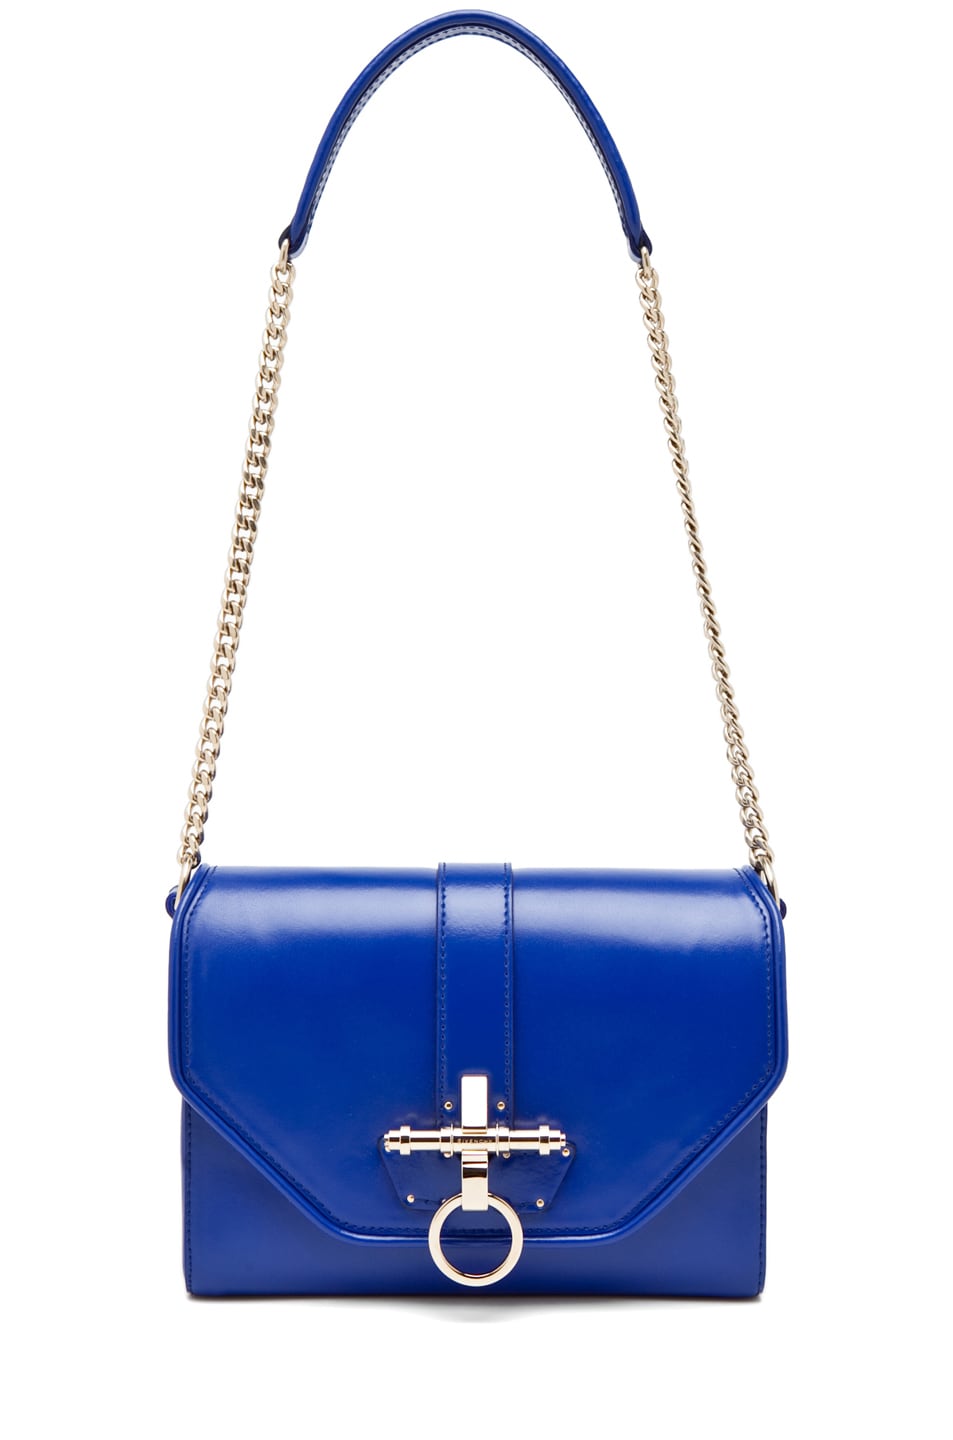 Givenchy Side Bag in Blue | FWRD